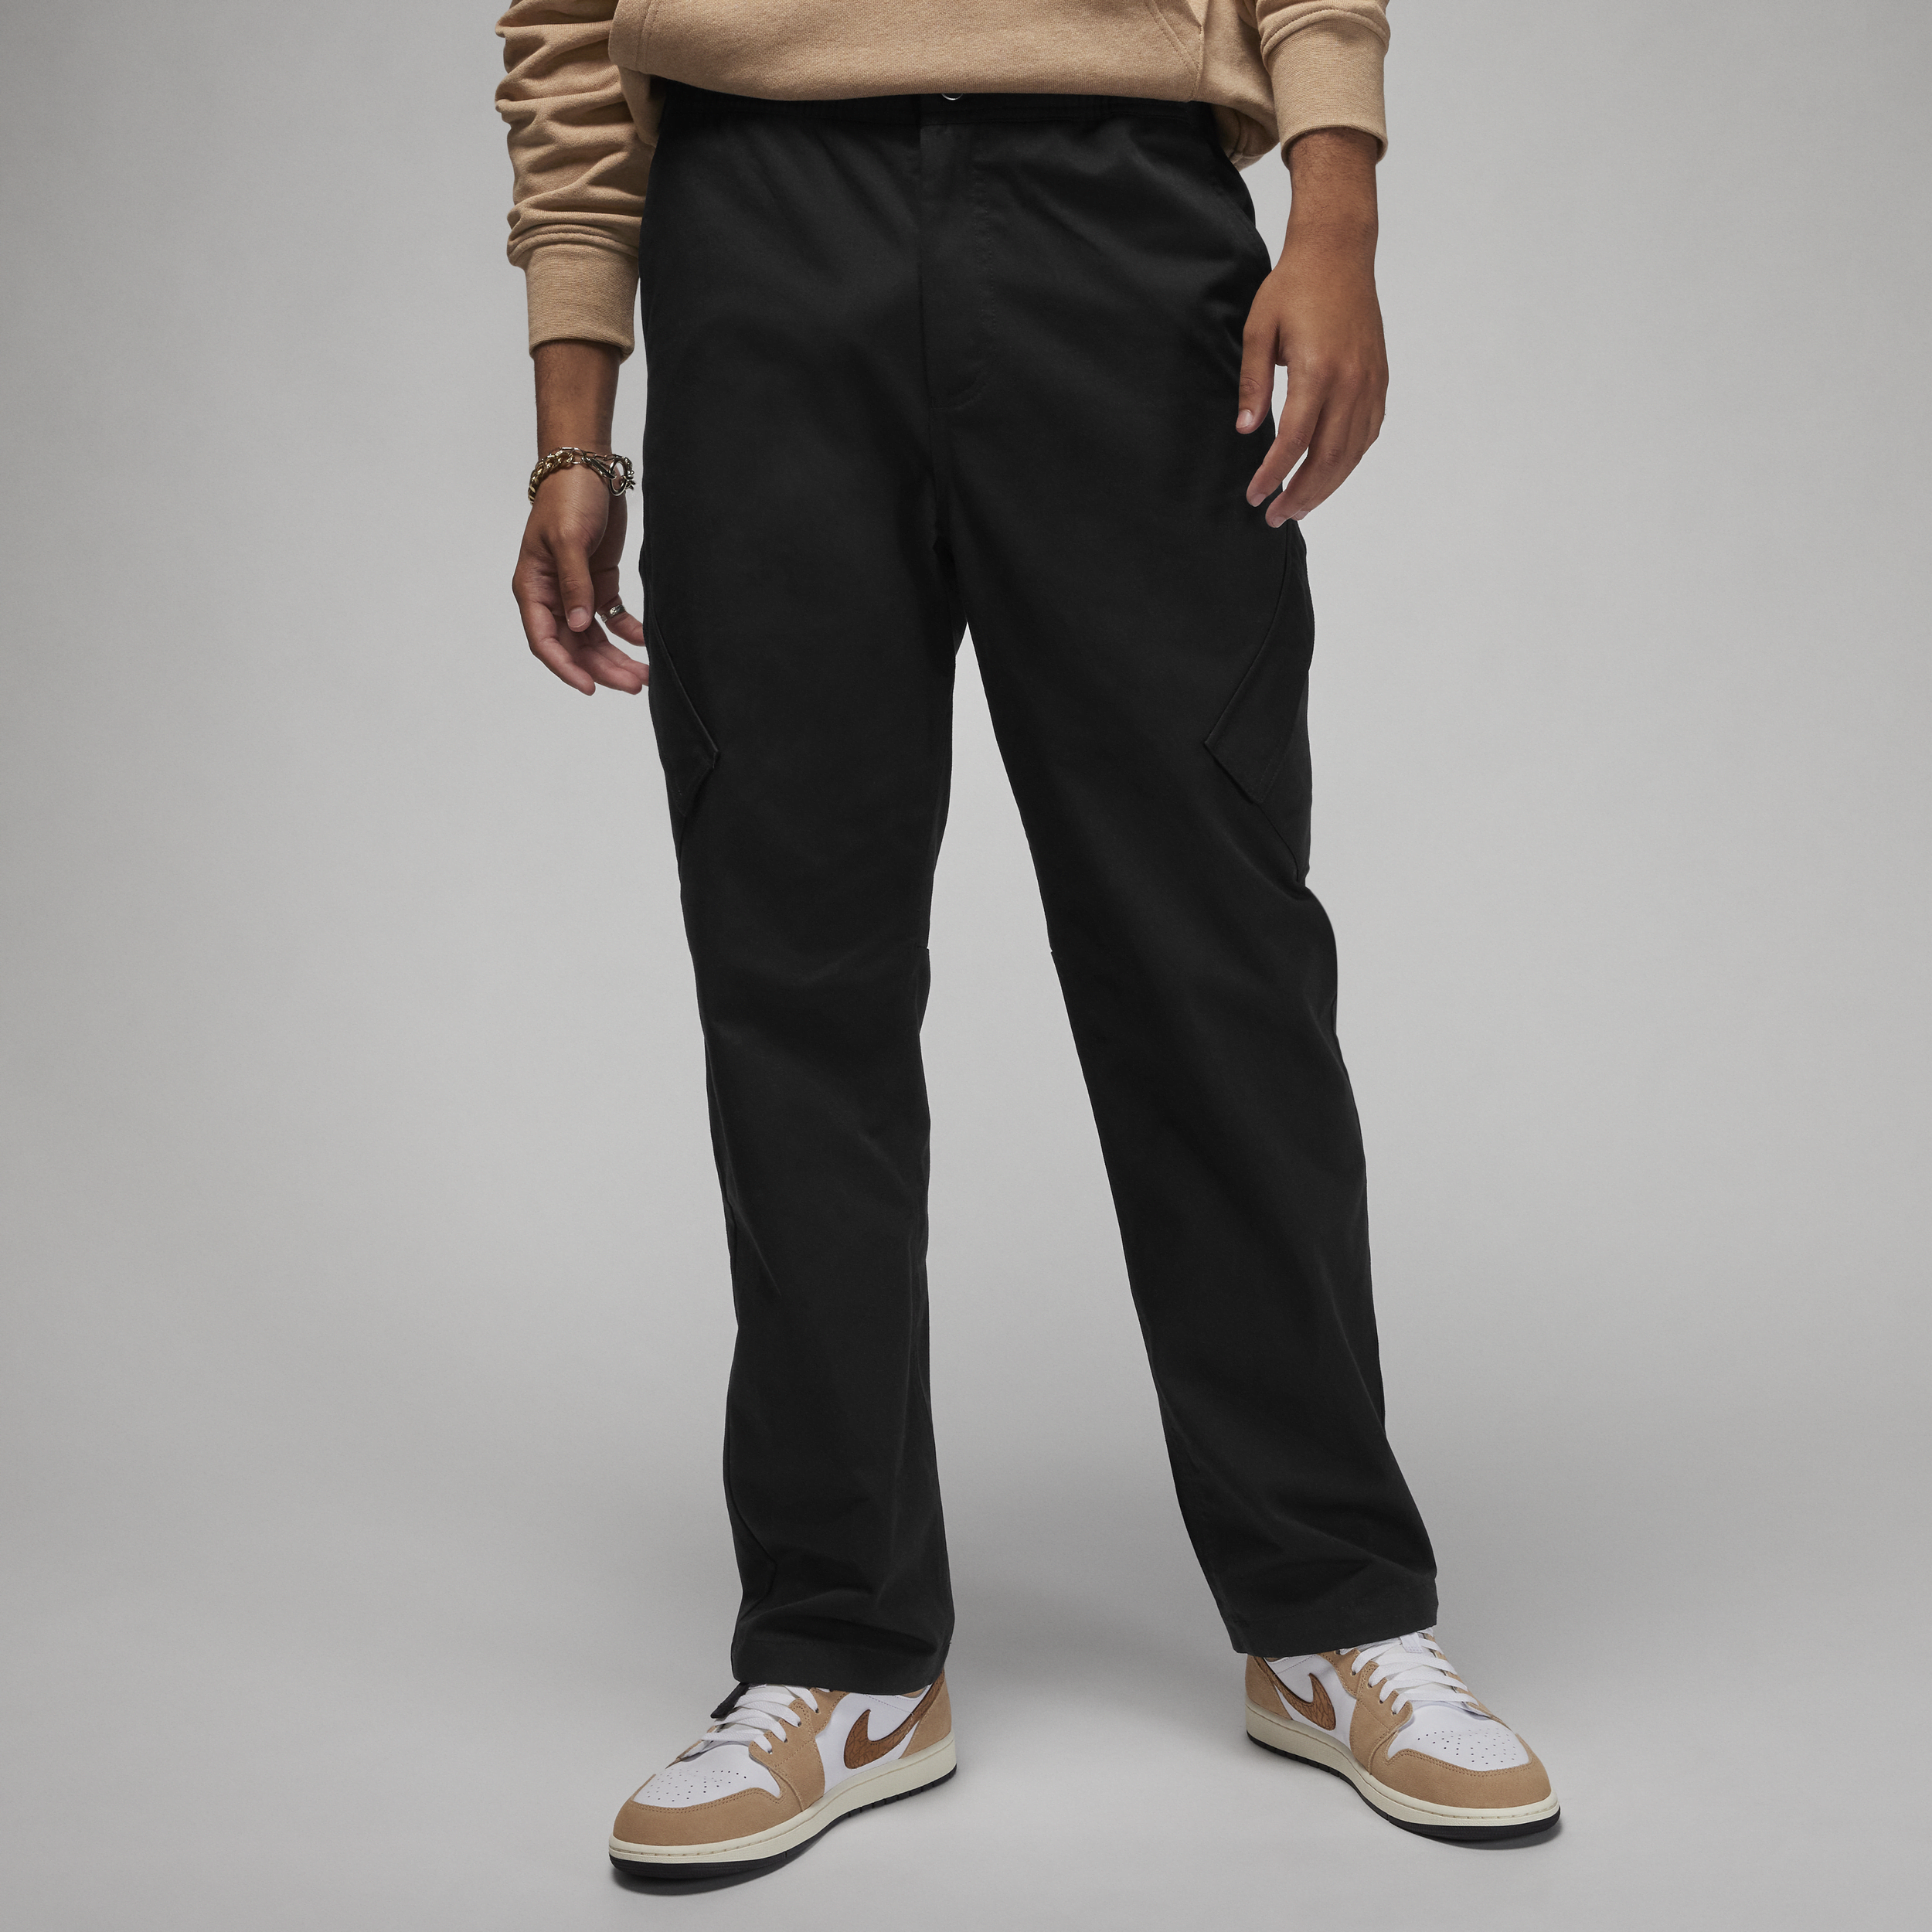 Nike Pantaloni Jordan Essentials Chicago – Uomo - Nero